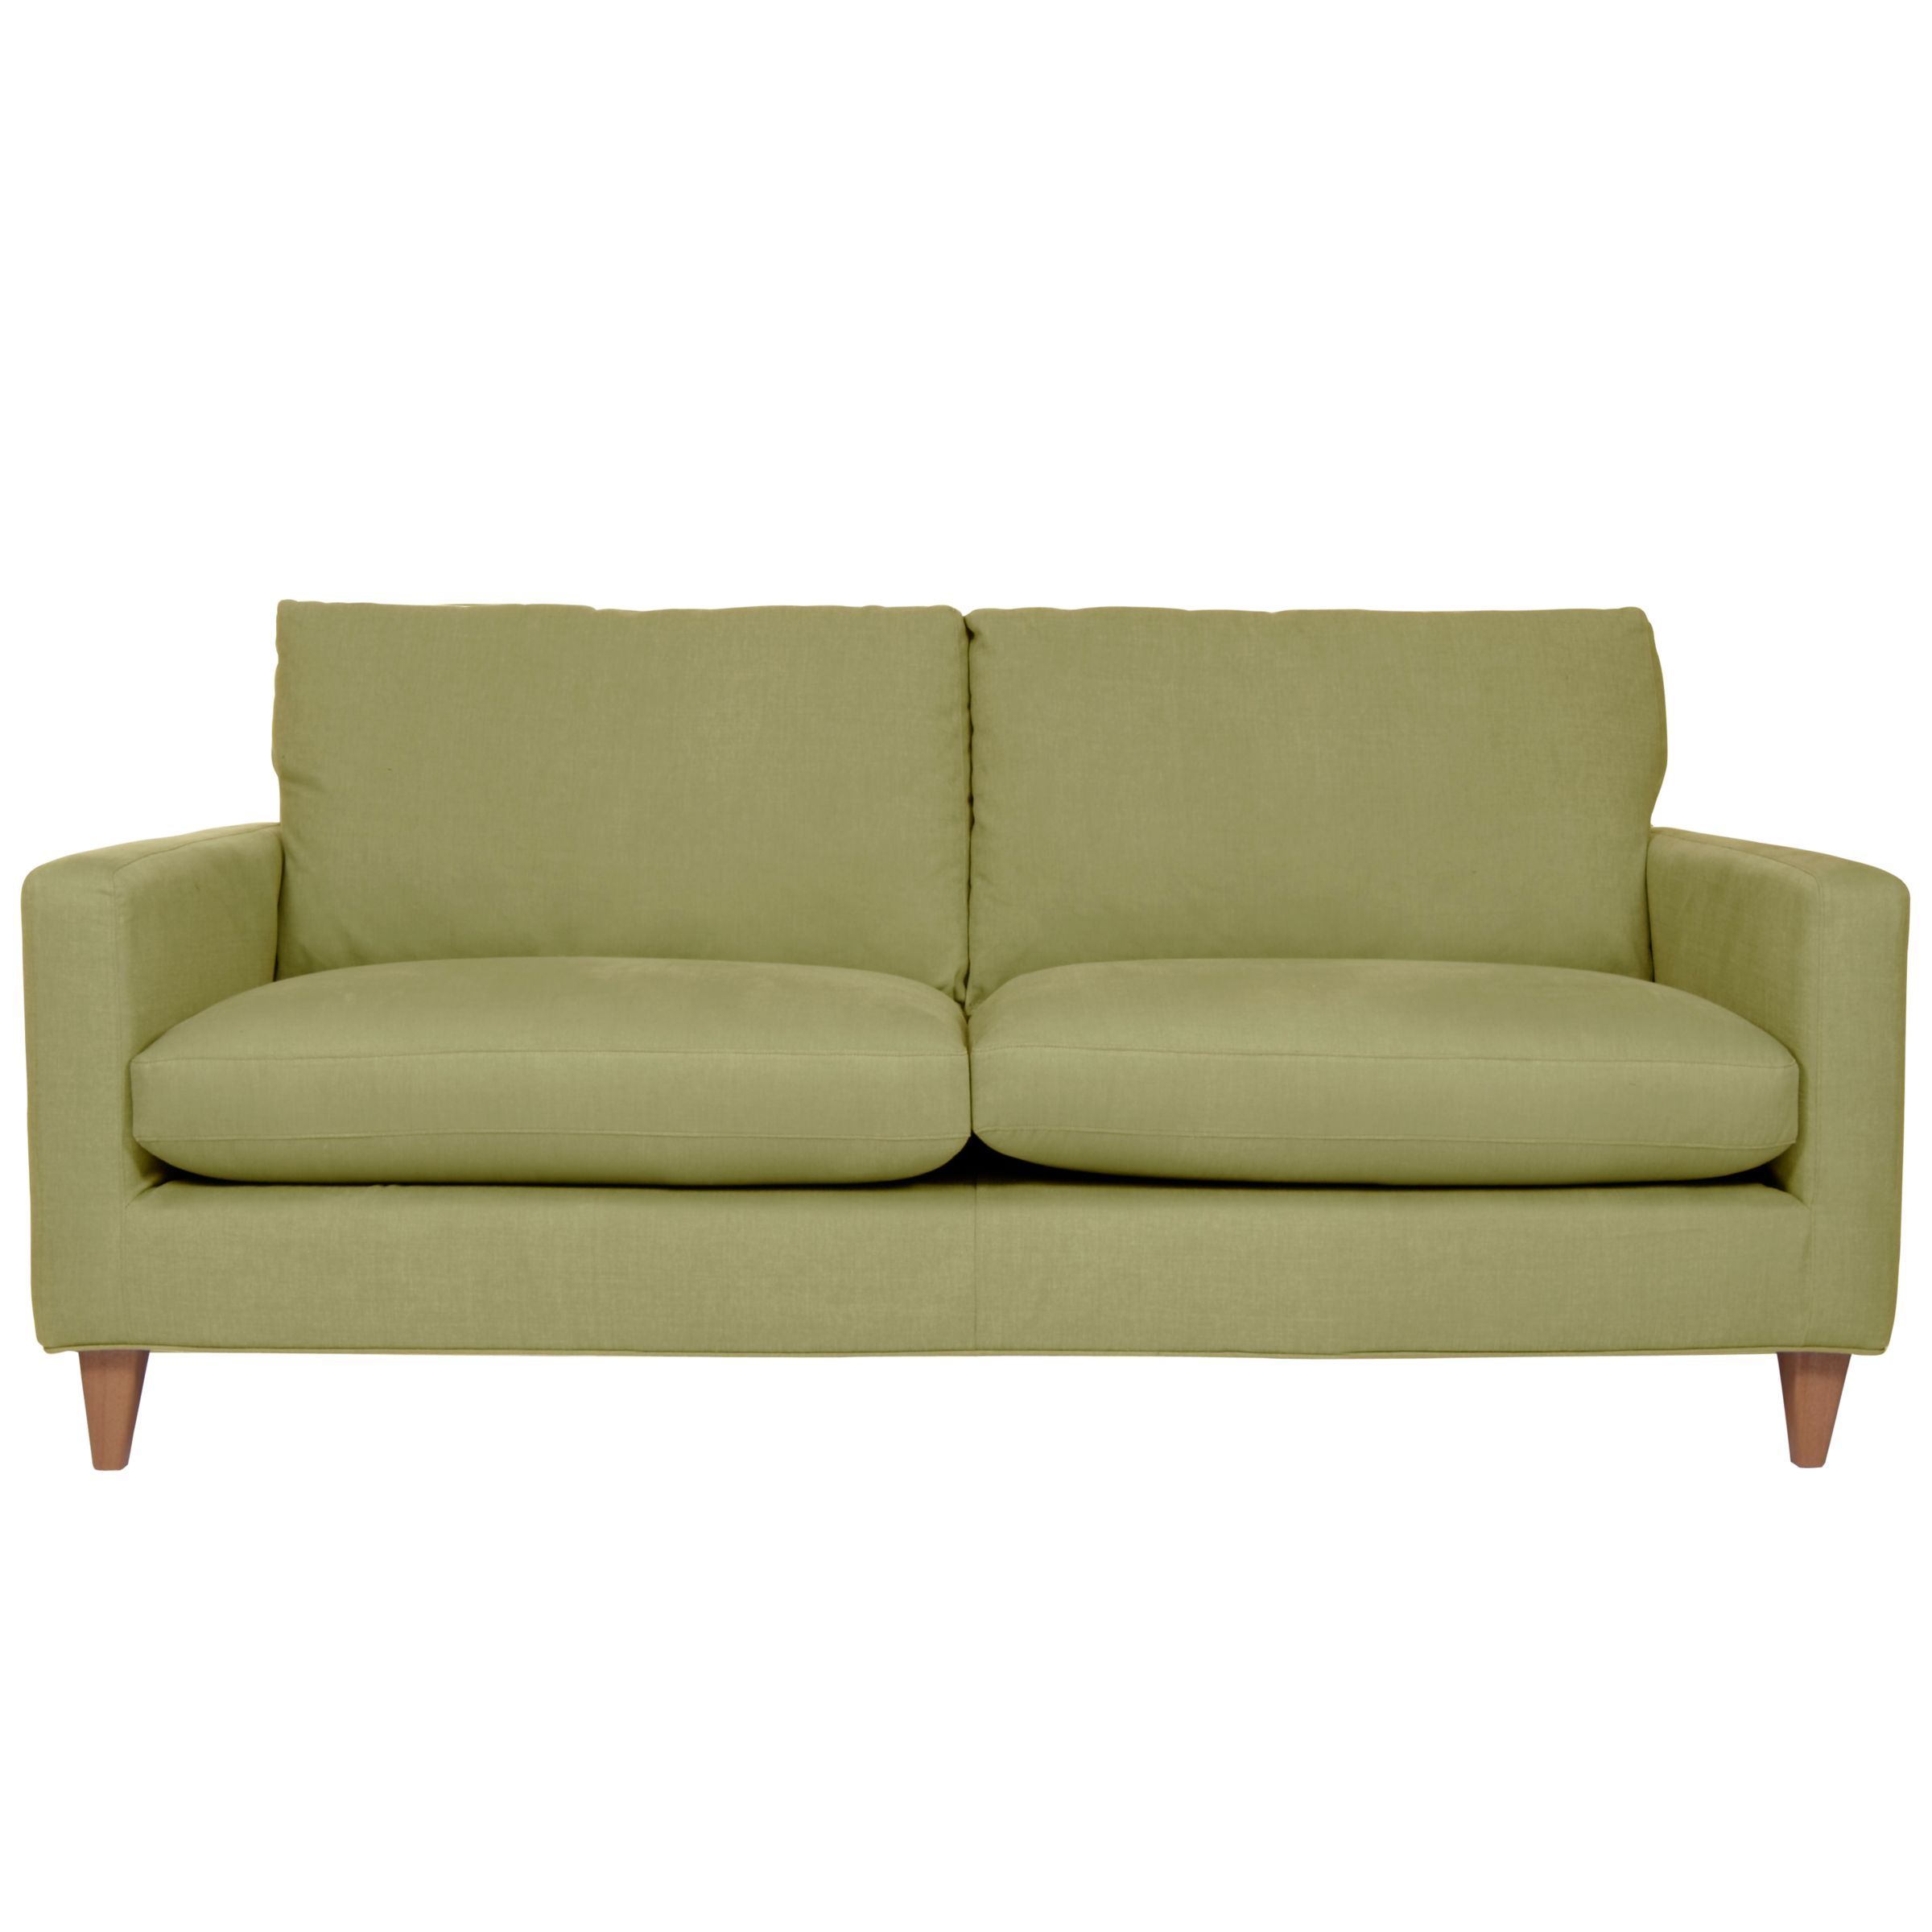 John Lewis Bailey Large Sofa, Olive, width 194cm